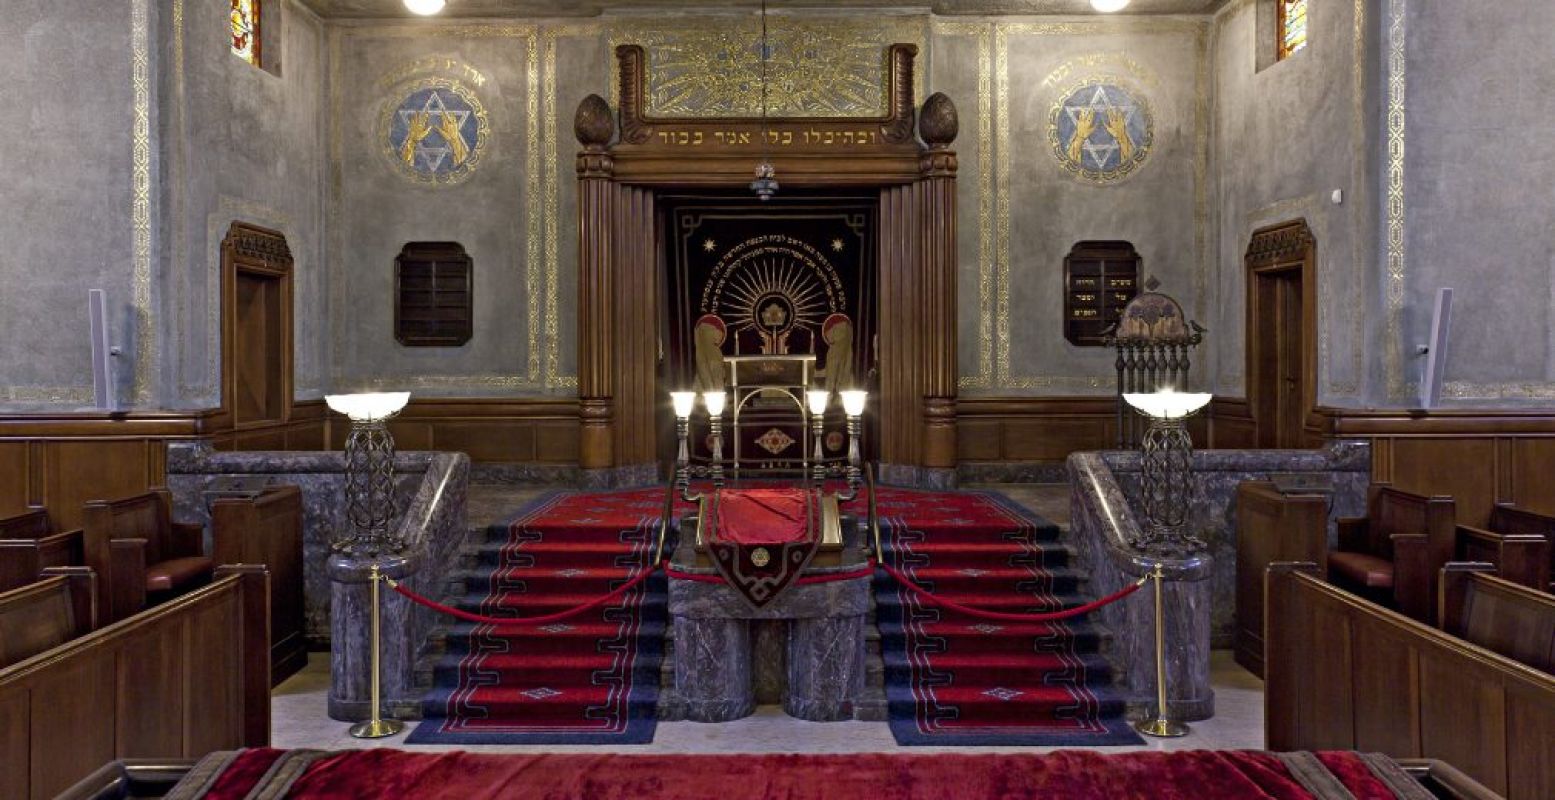 Bewonder het interieur van de schitterende synagoge in Enschede. Foto: Synagoge Enschede